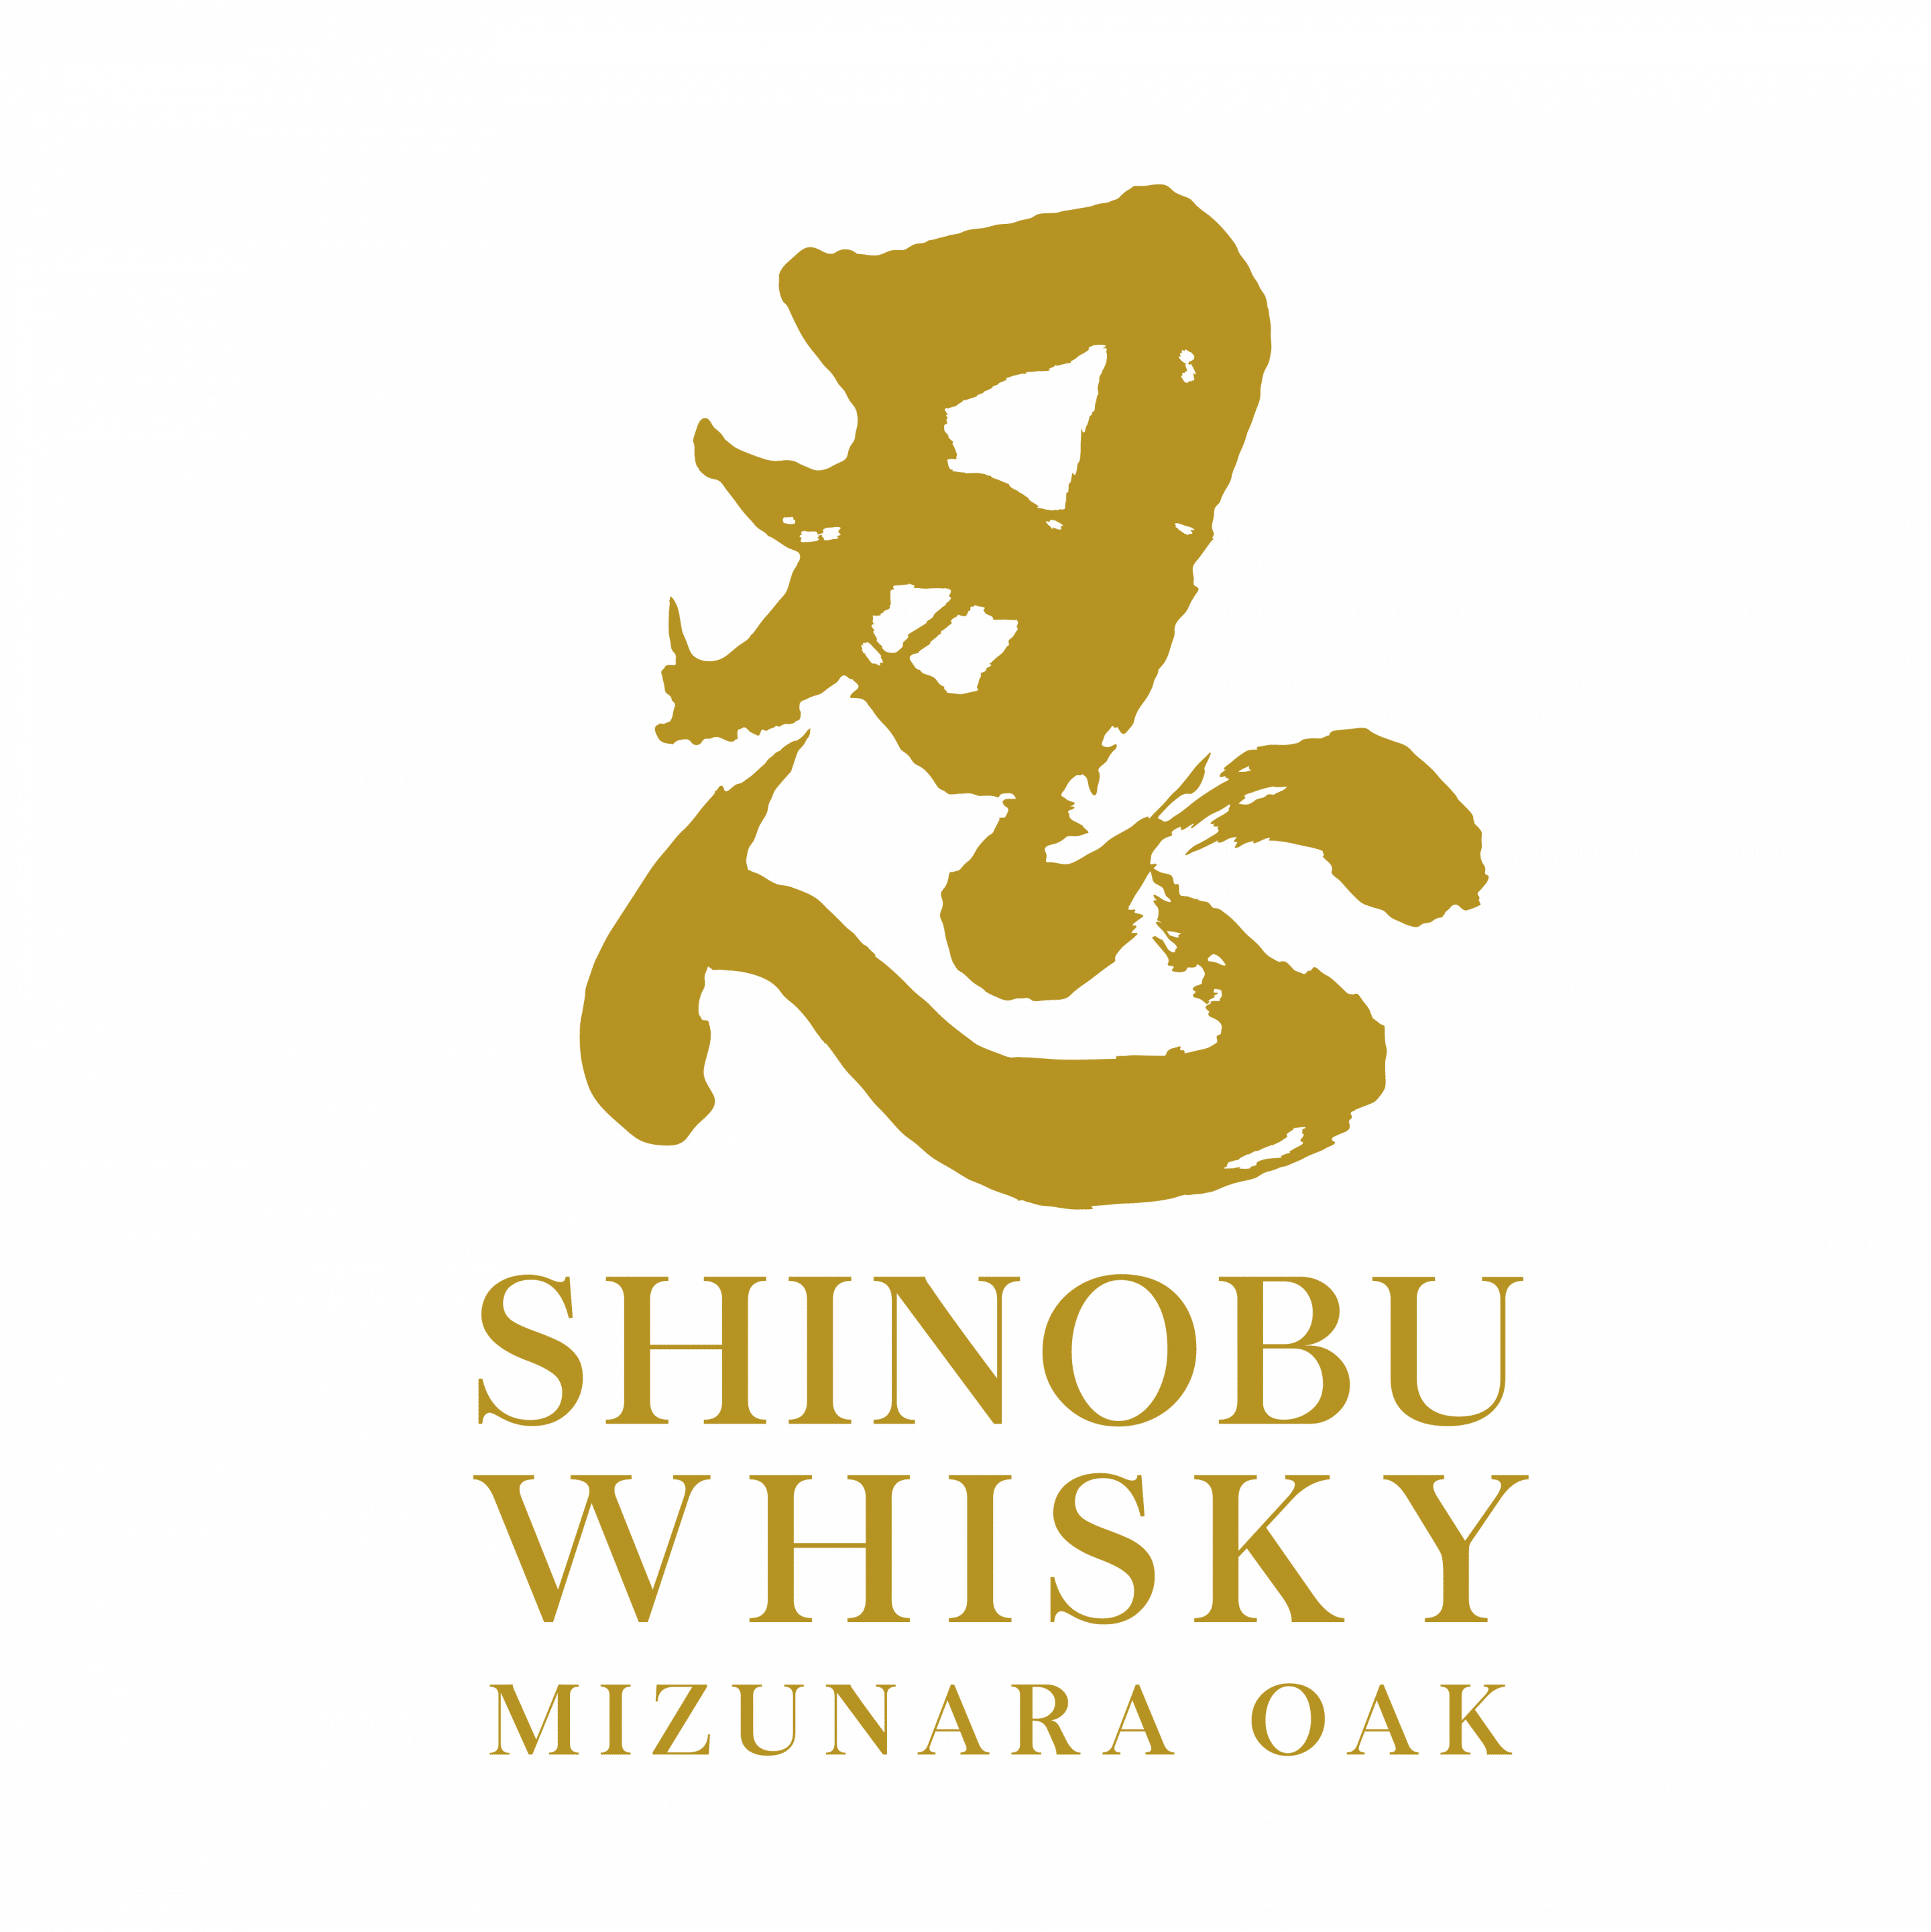 shinobu whisky japonais logo